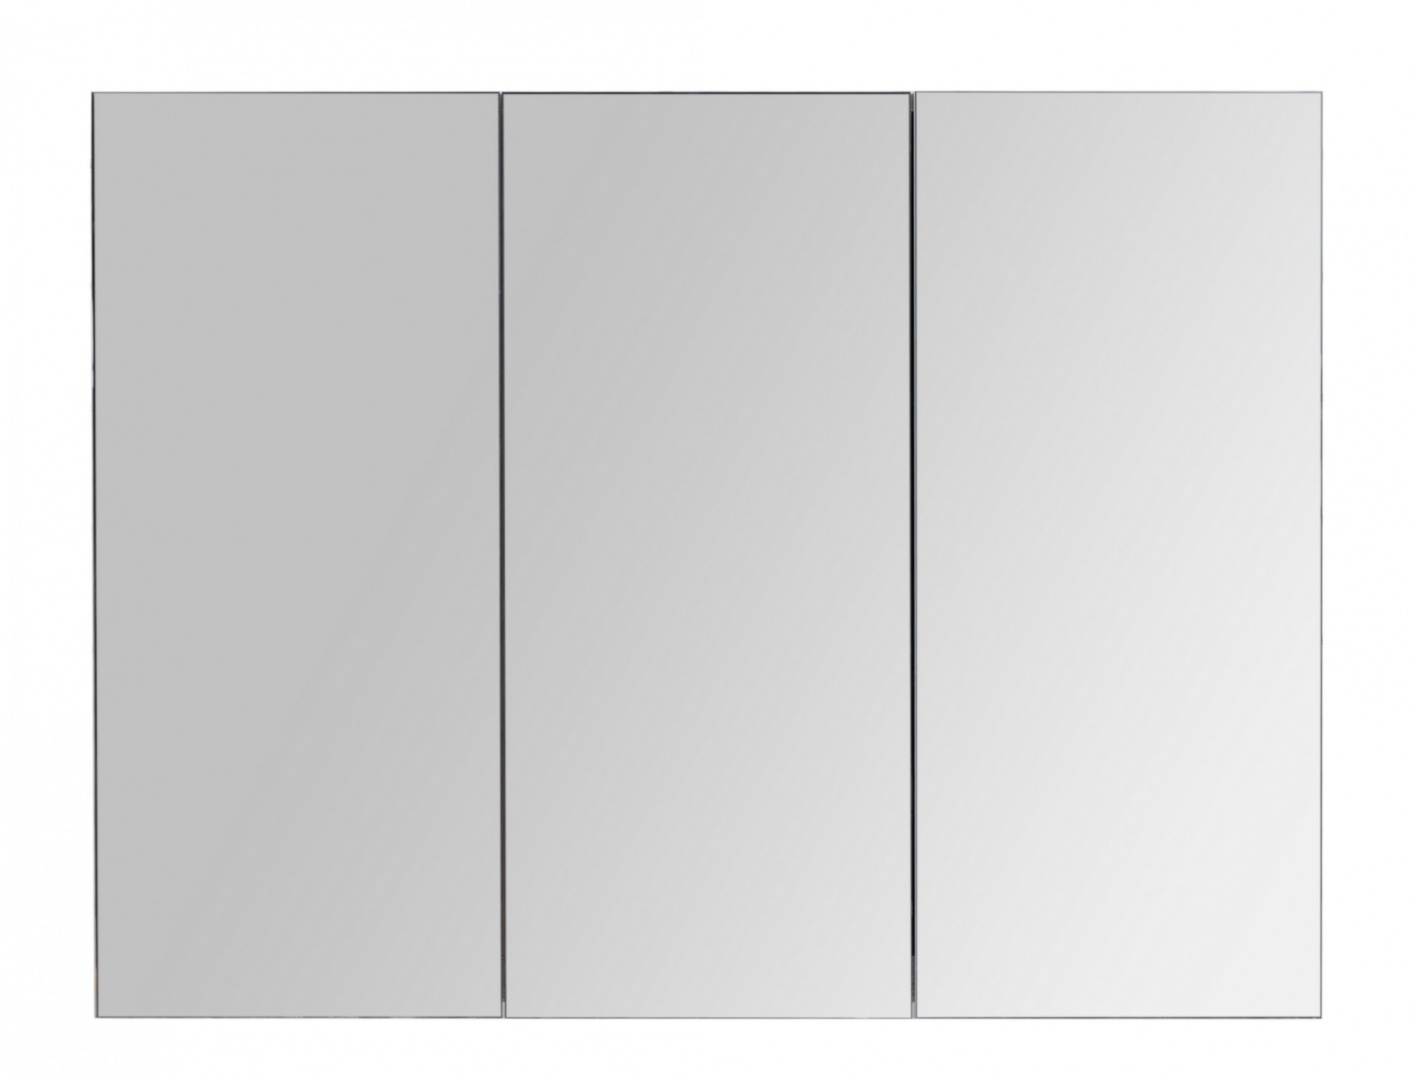 Зеркальный шкаф Dreja Premium 100 см дуб кантри, двухстороннее зеркало